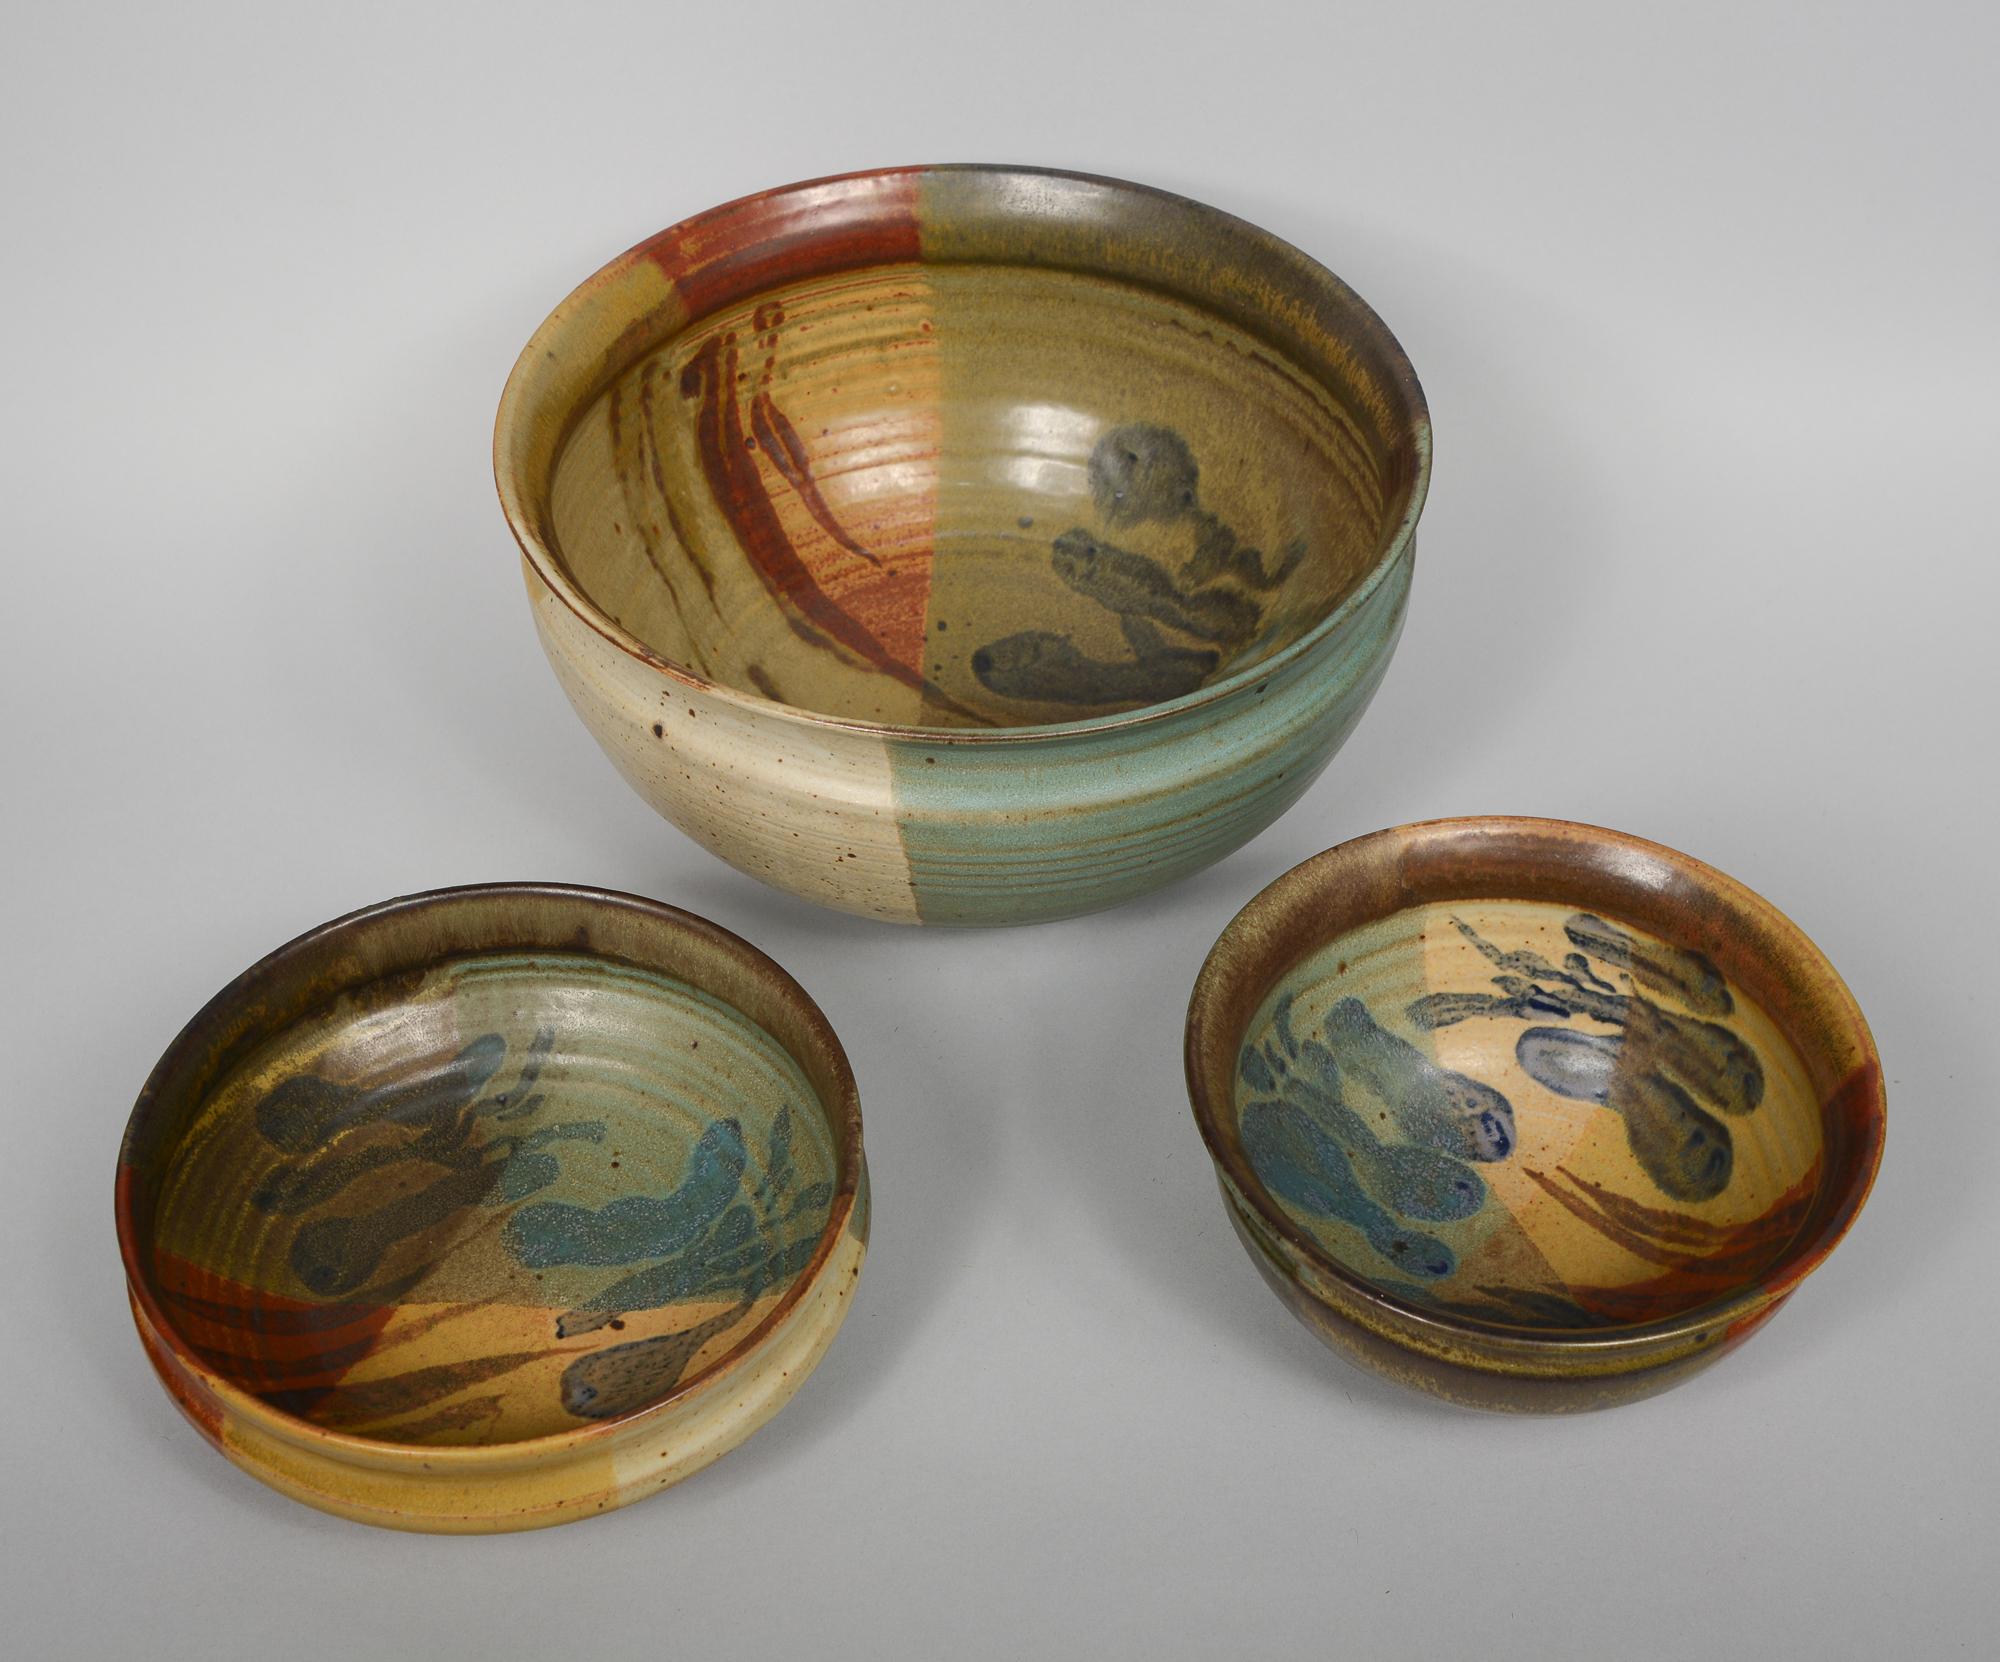 Three bowls by studio potter William 